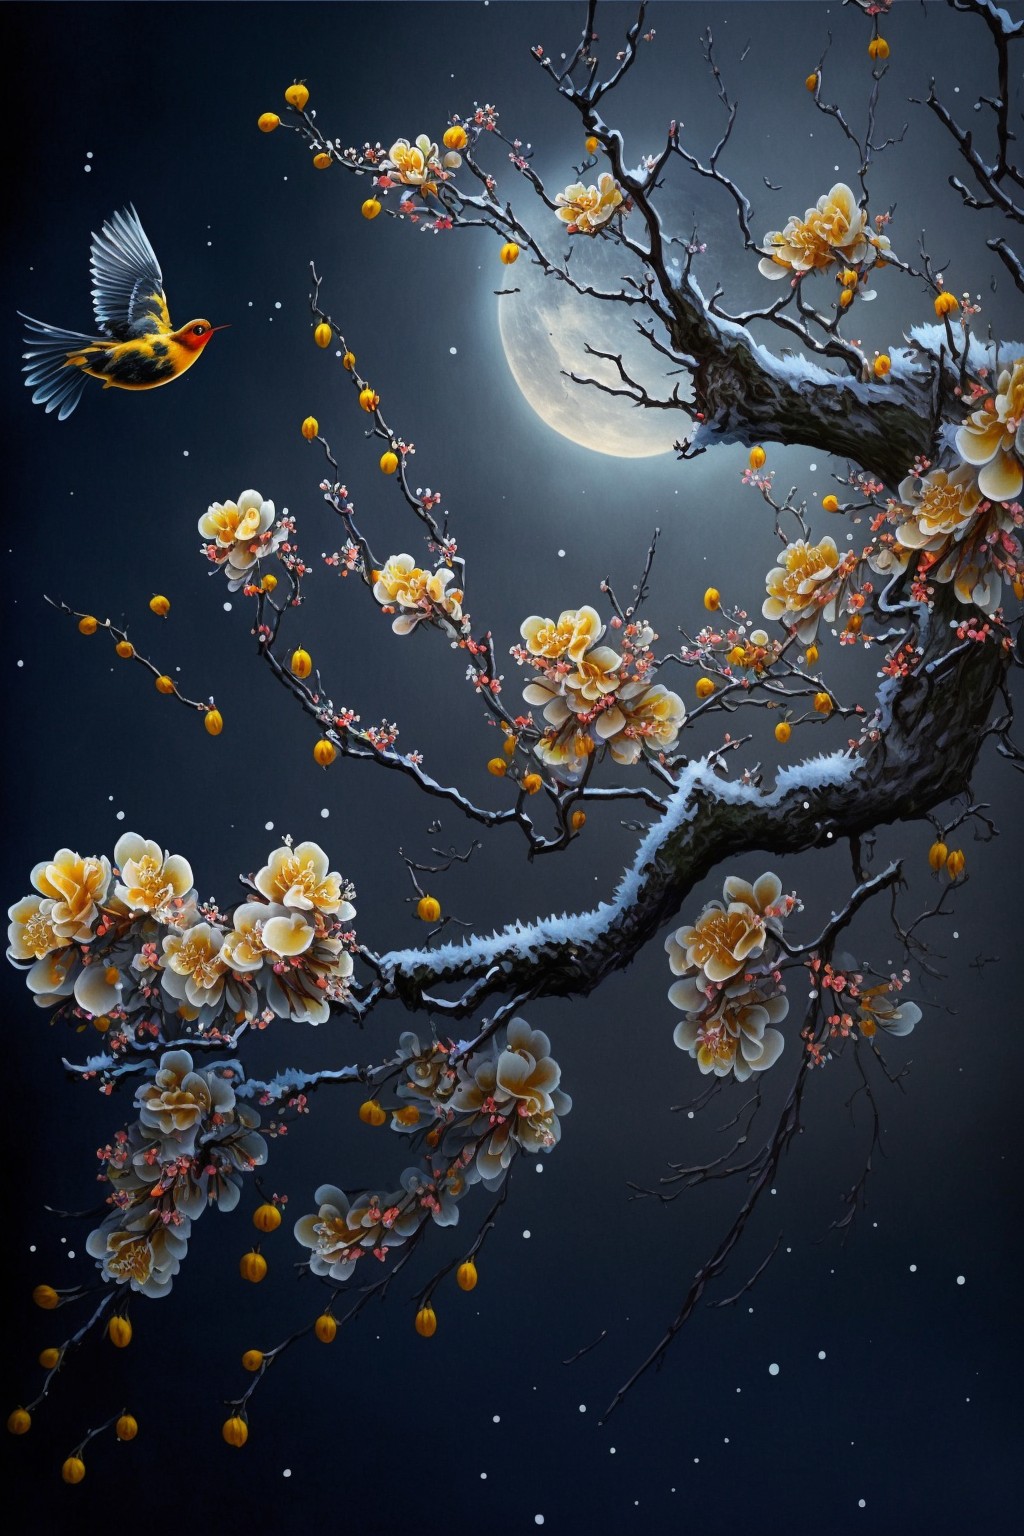 Magnolia under the moon